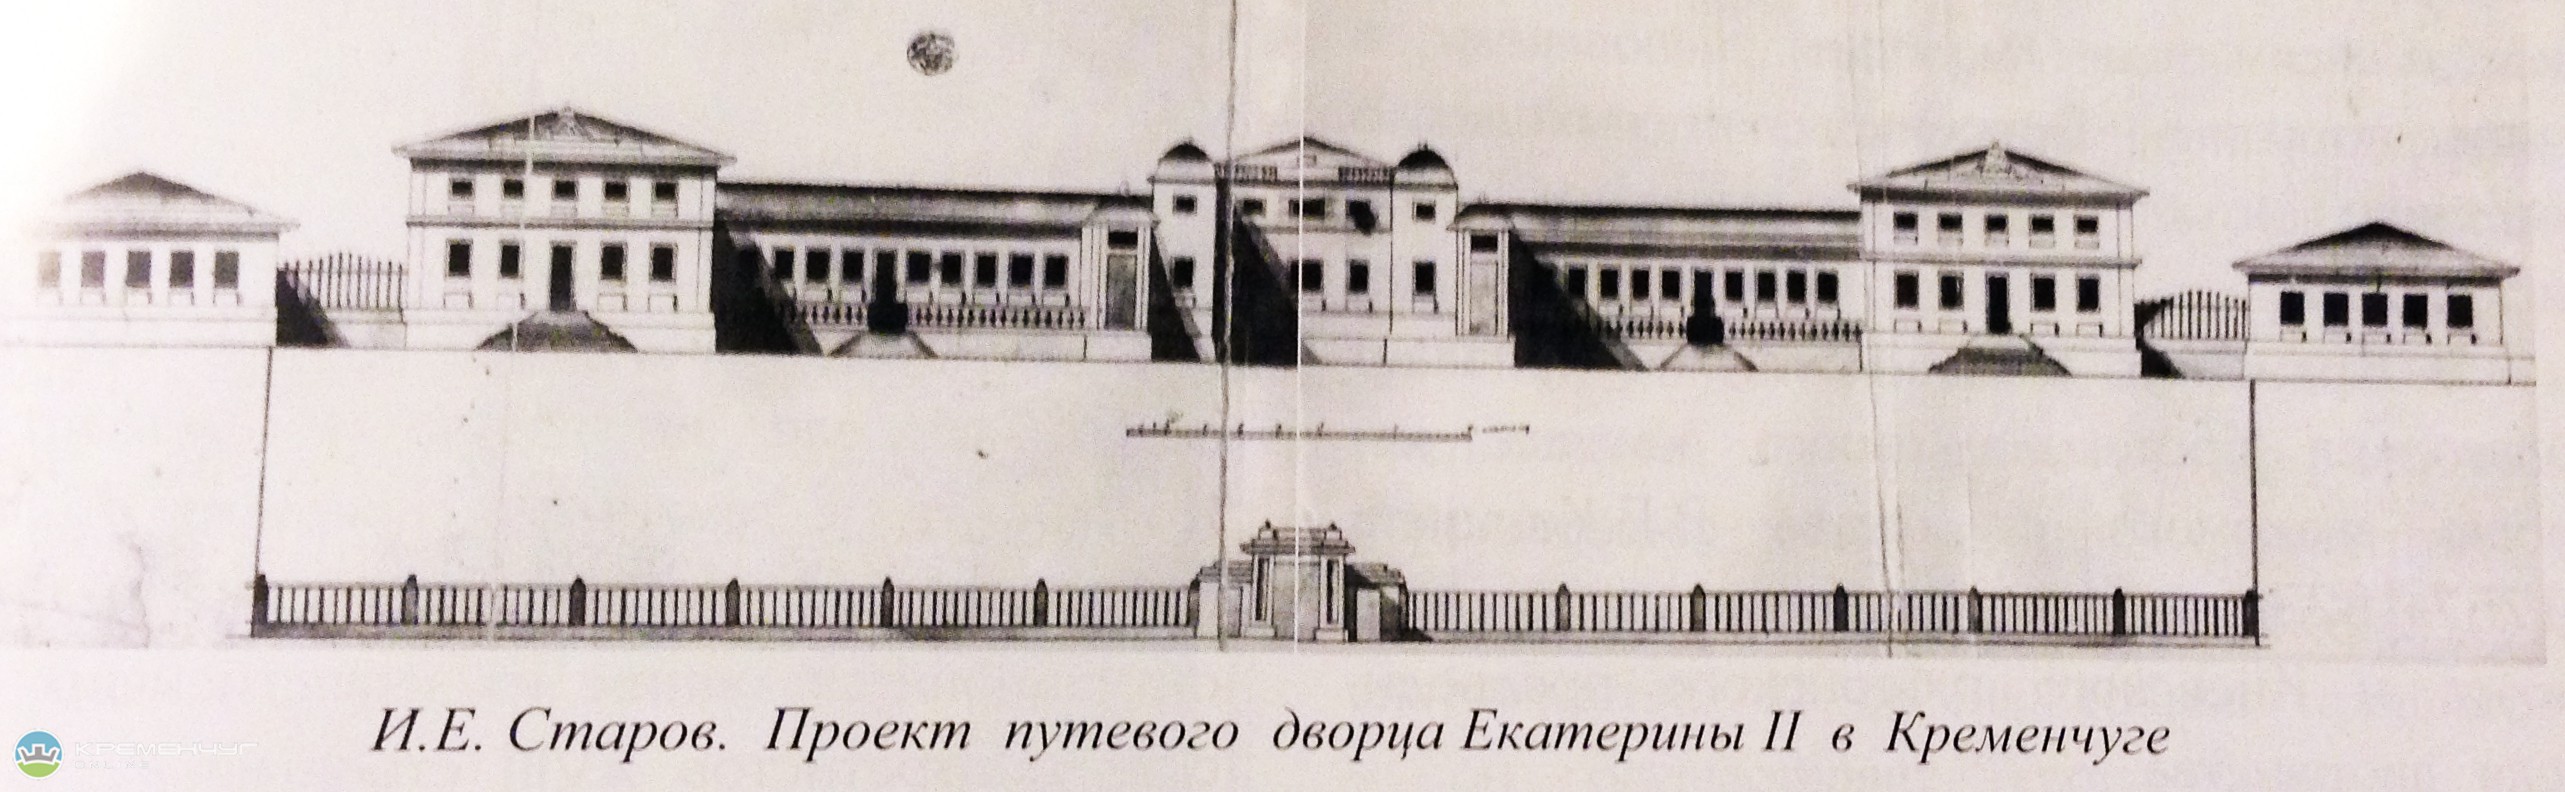 Дворец в Кременчуге 1787 год